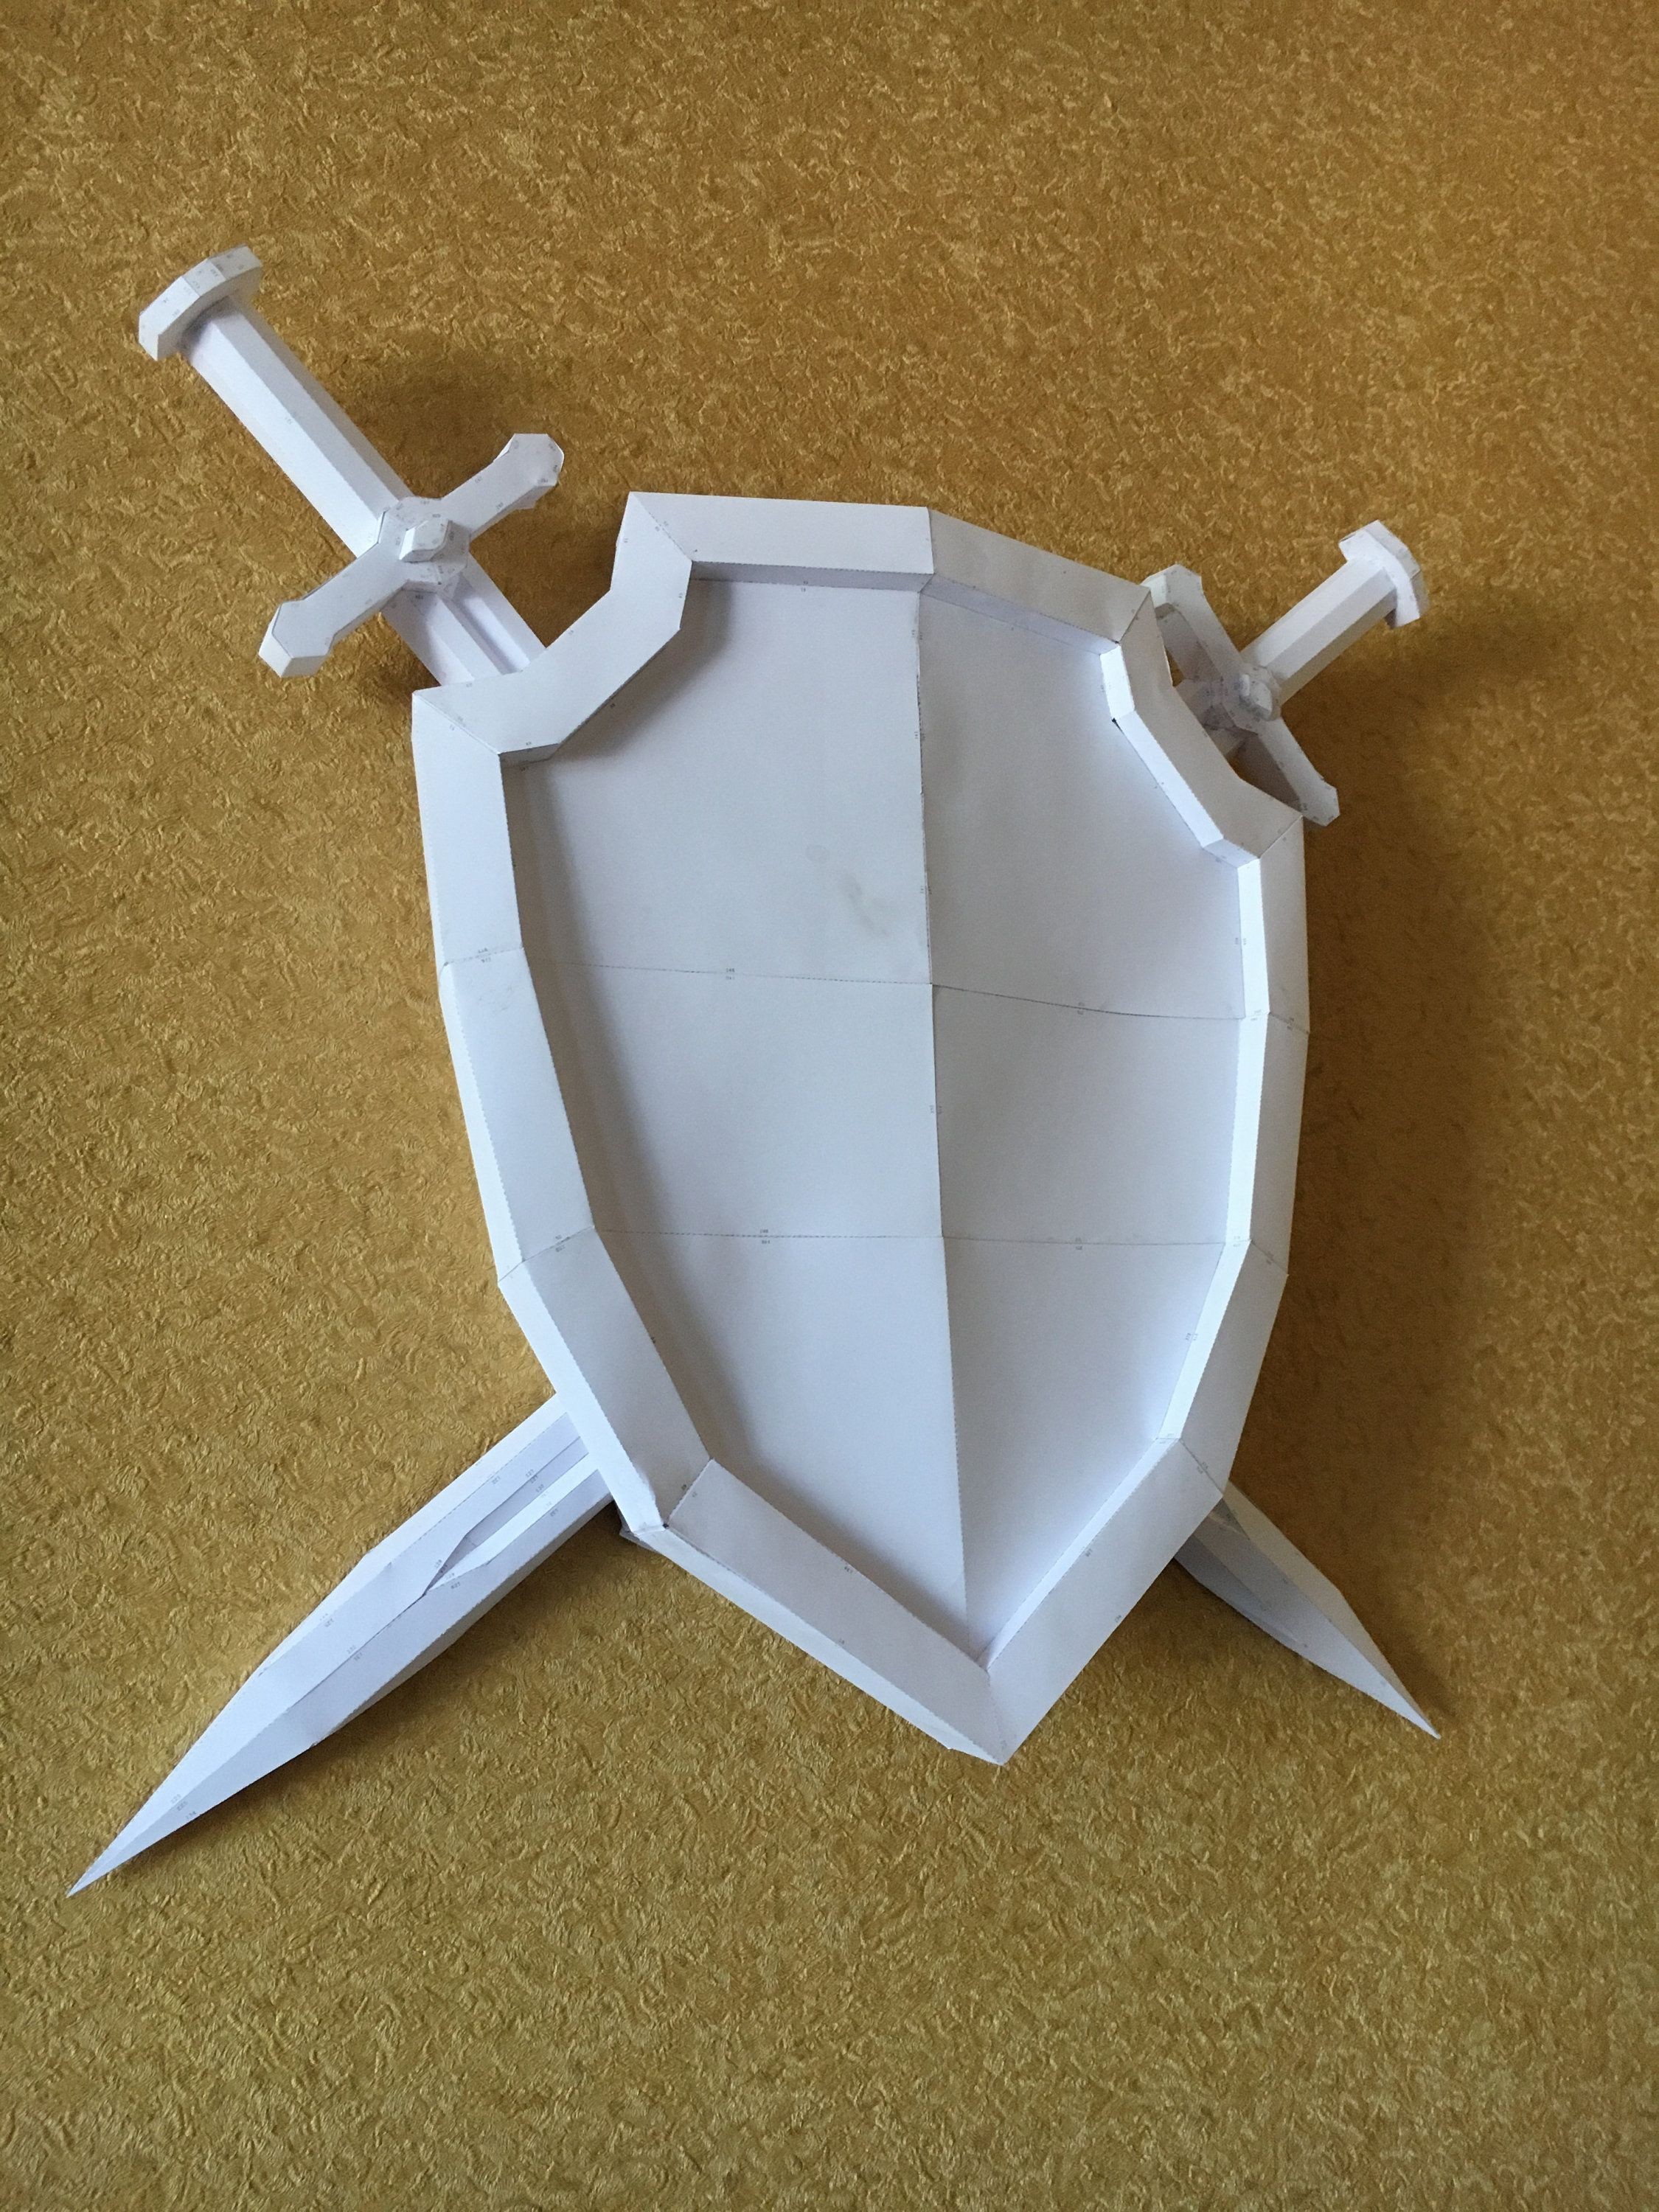 Cat Papercraft Sword Shield Diy Papercraft Model ÐÑÐ¼Ð°Ð¶Ð½ÑÐµ Ð¸Ð·Ð´ÐµÐ Ð¸Ñ